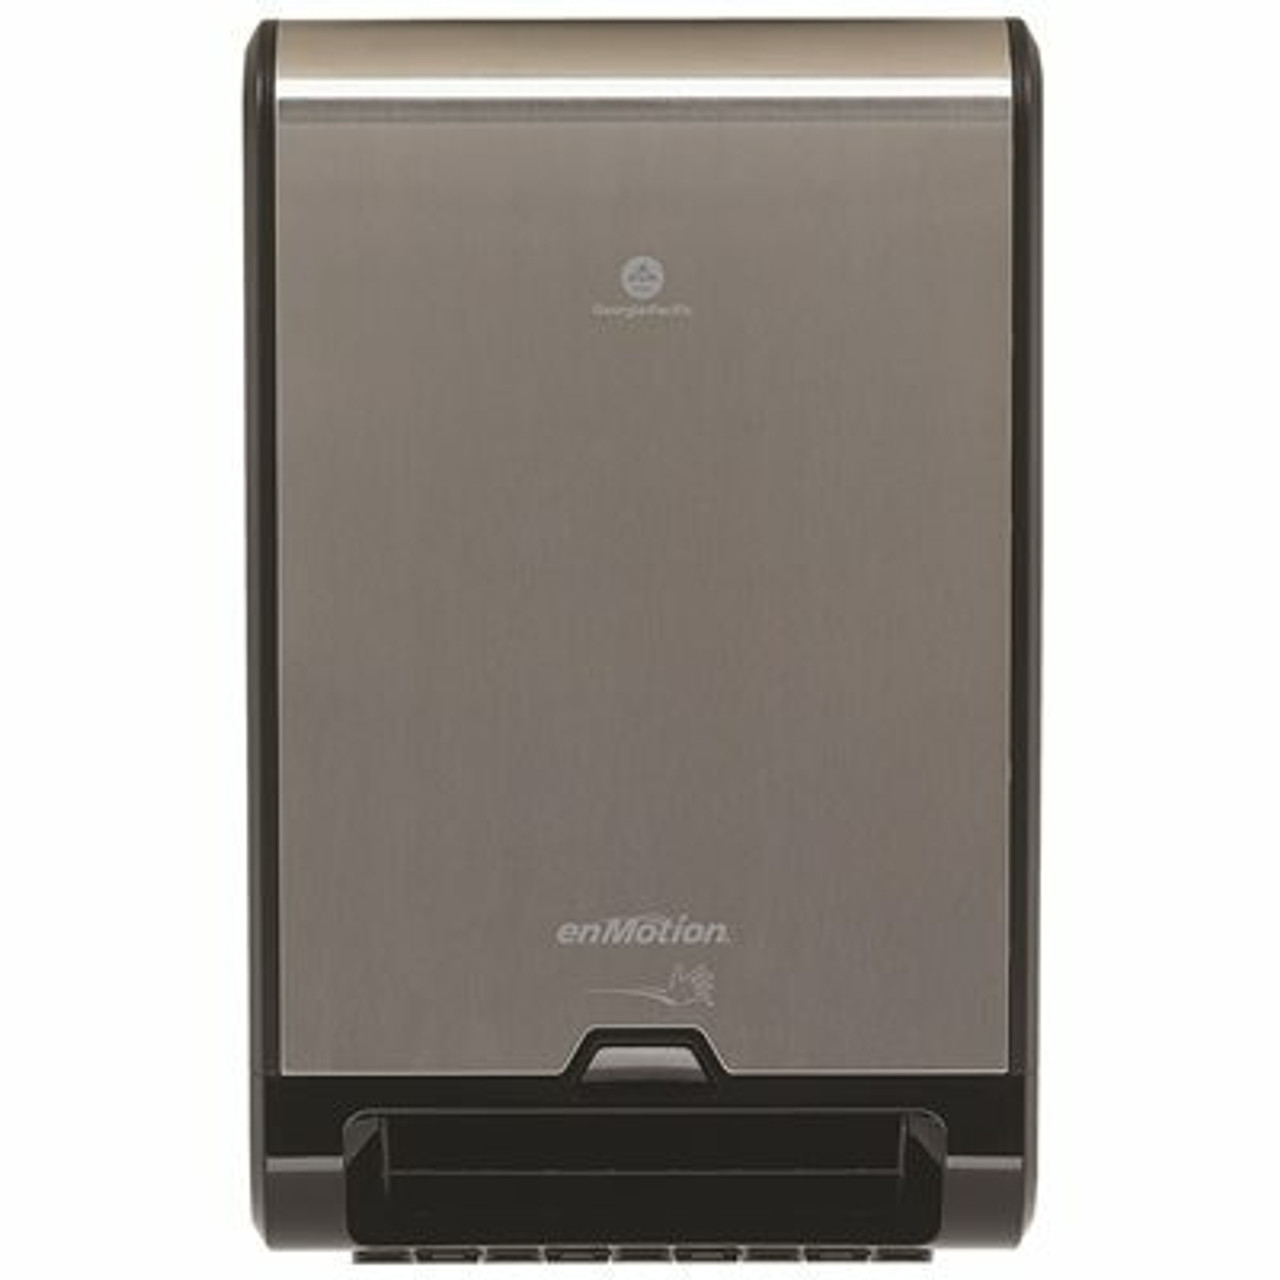 Georgia-Pacific Gp Enmotion Flex Recessed Paper Towel Dispenser, Stainless